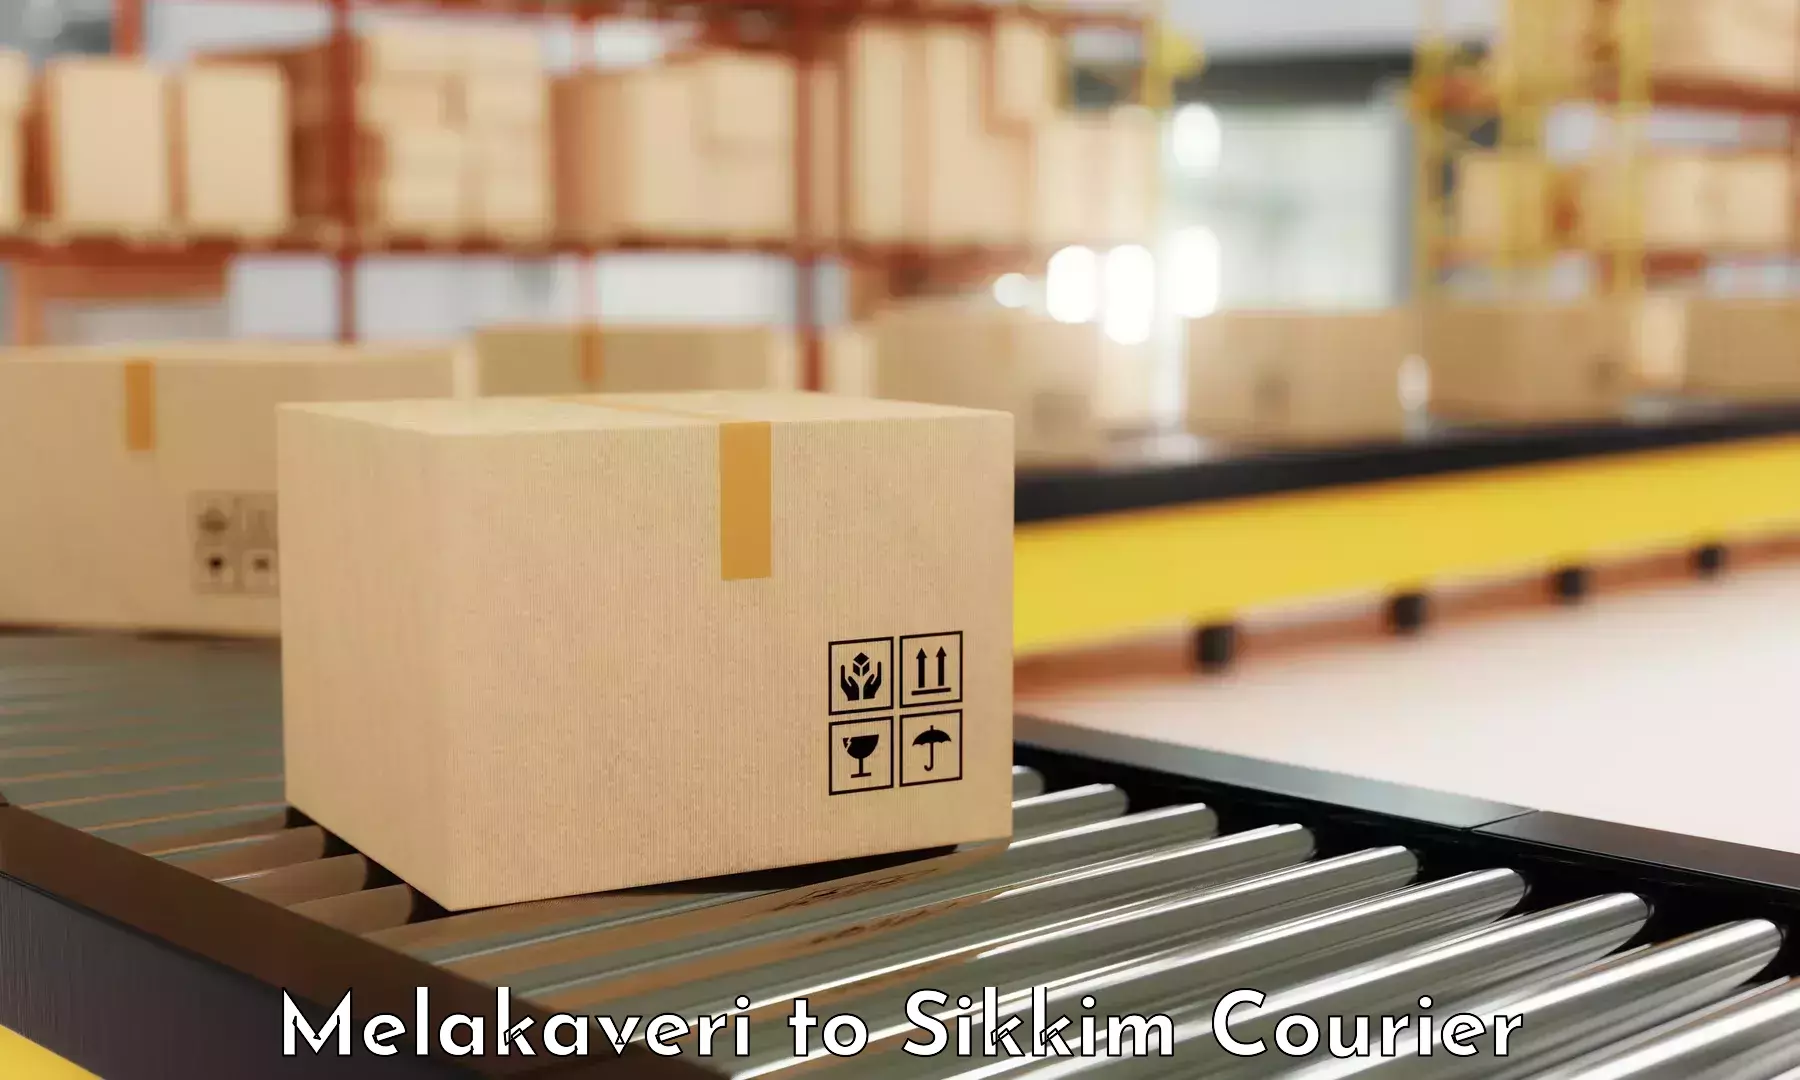 State-of-the-art courier technology Melakaveri to Namchi